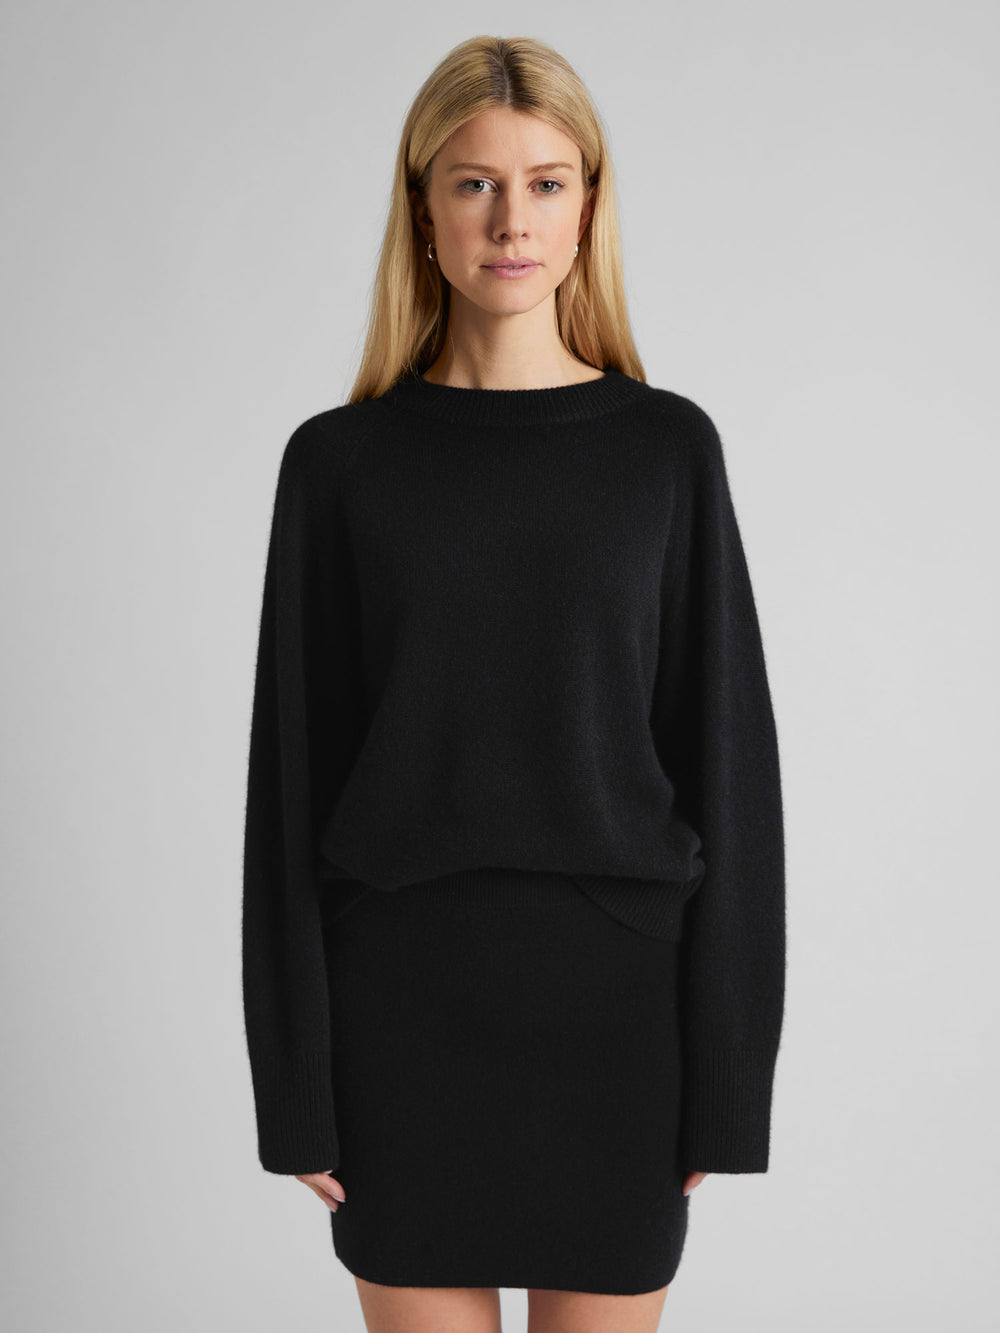 Cashmere skirt "Olava" in 100% pure cashmere. Scandinavian design by Kashmina. Color: Black.